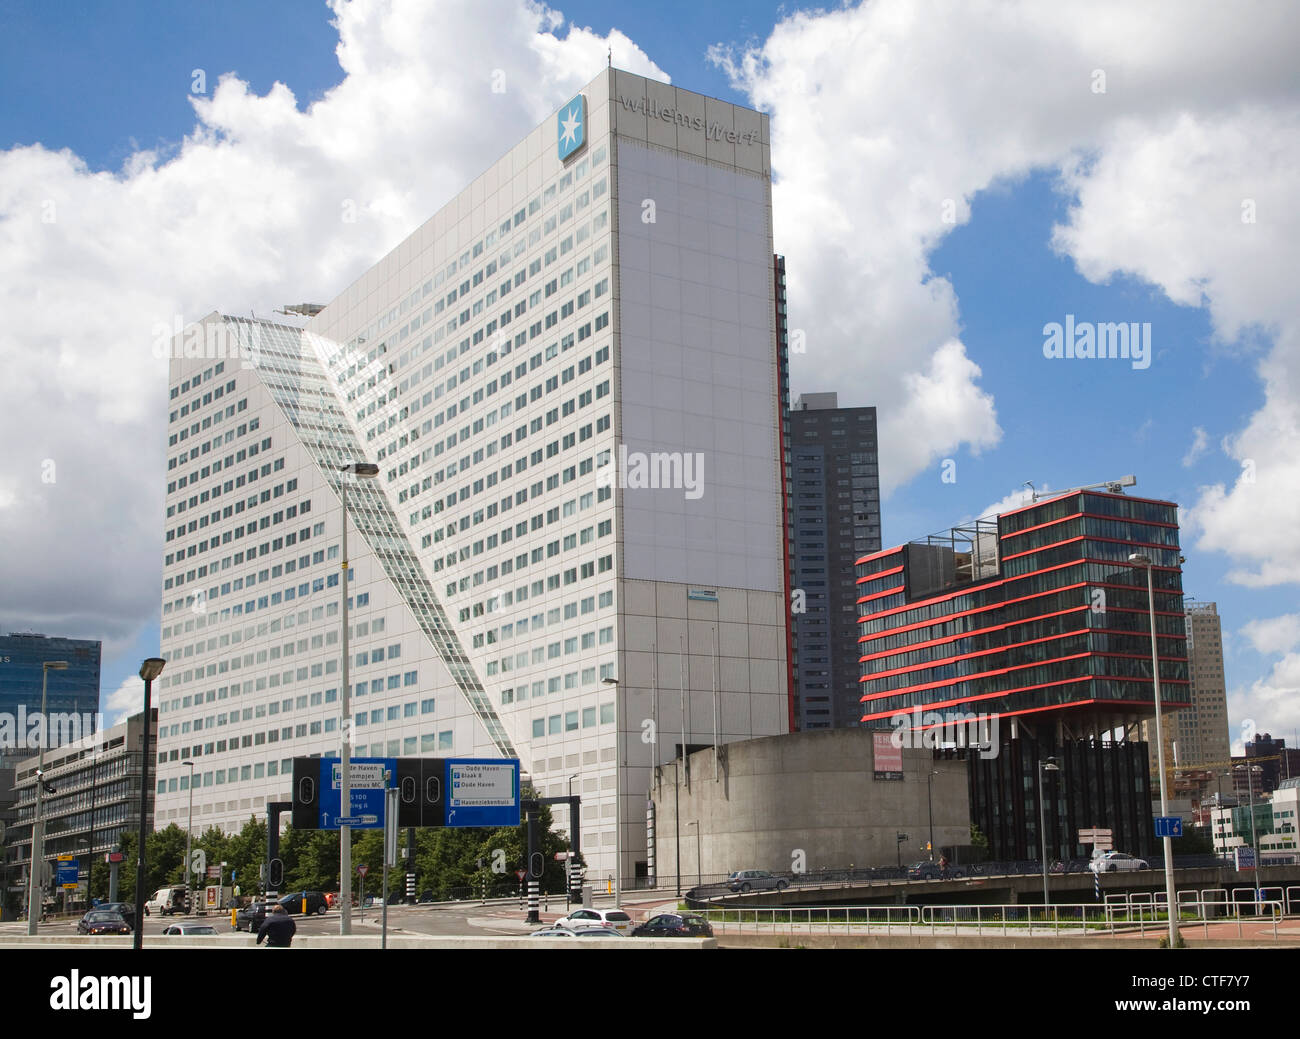 Willemswerf Nedlloyd Shipping Company building, Rotterdam, Países Bajos Foto de stock